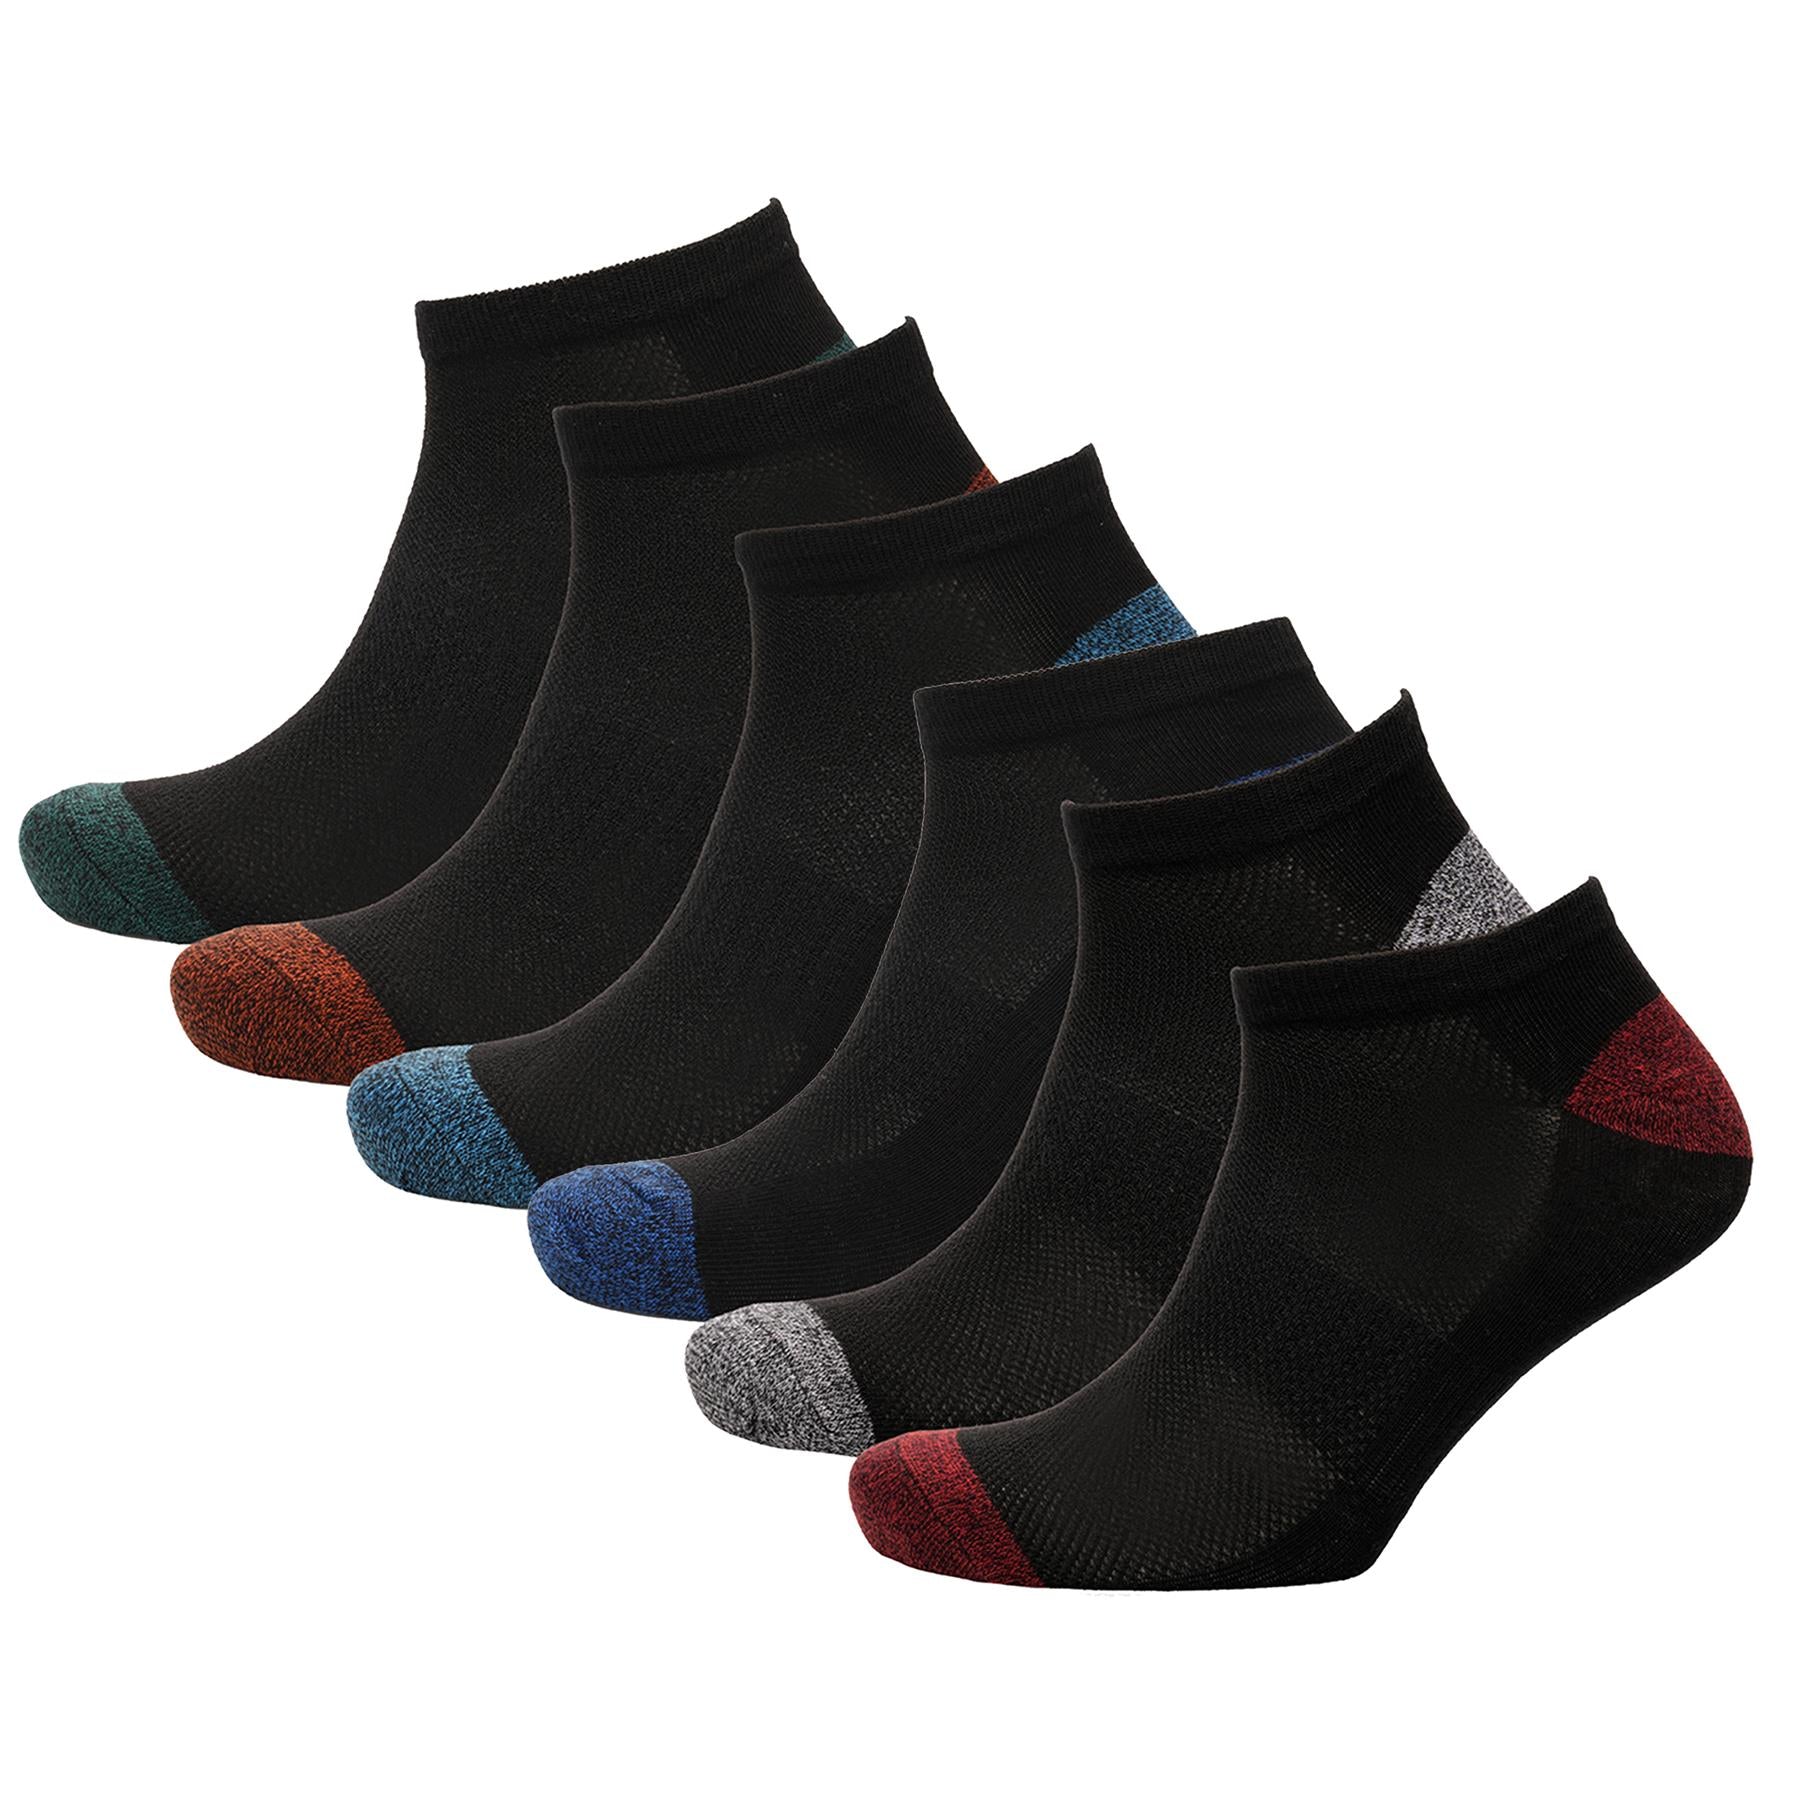 Mens Heel and Toe Twist Yarn Trainer Socks Pack of 6 Low Cut Cotton Mens Socks